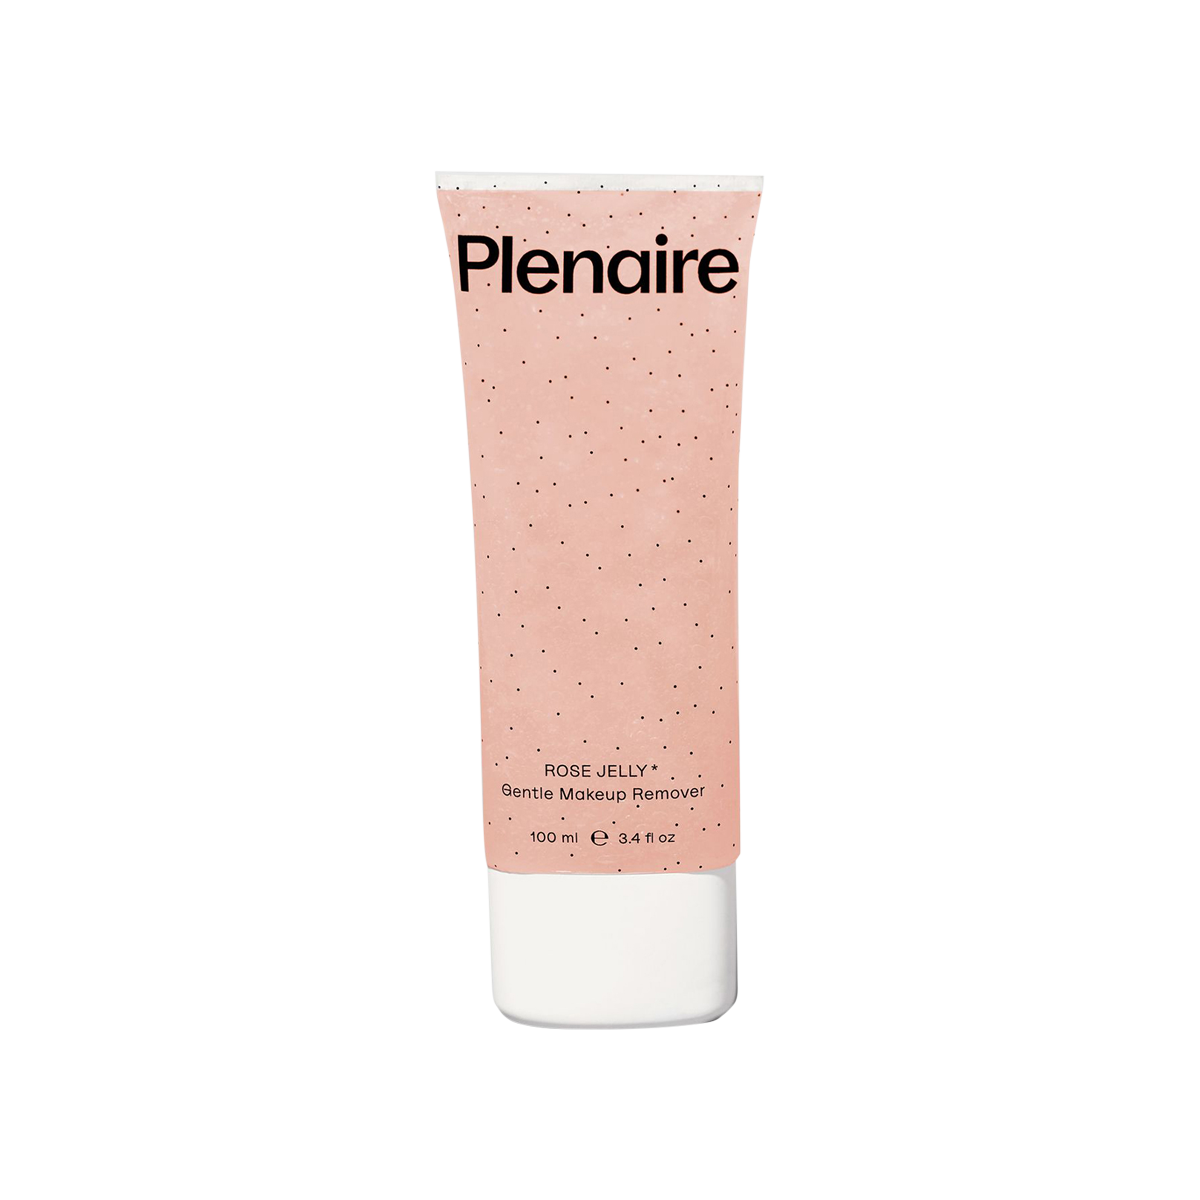 Plenaire - Rose Jelly* Gentle Makeup Remover